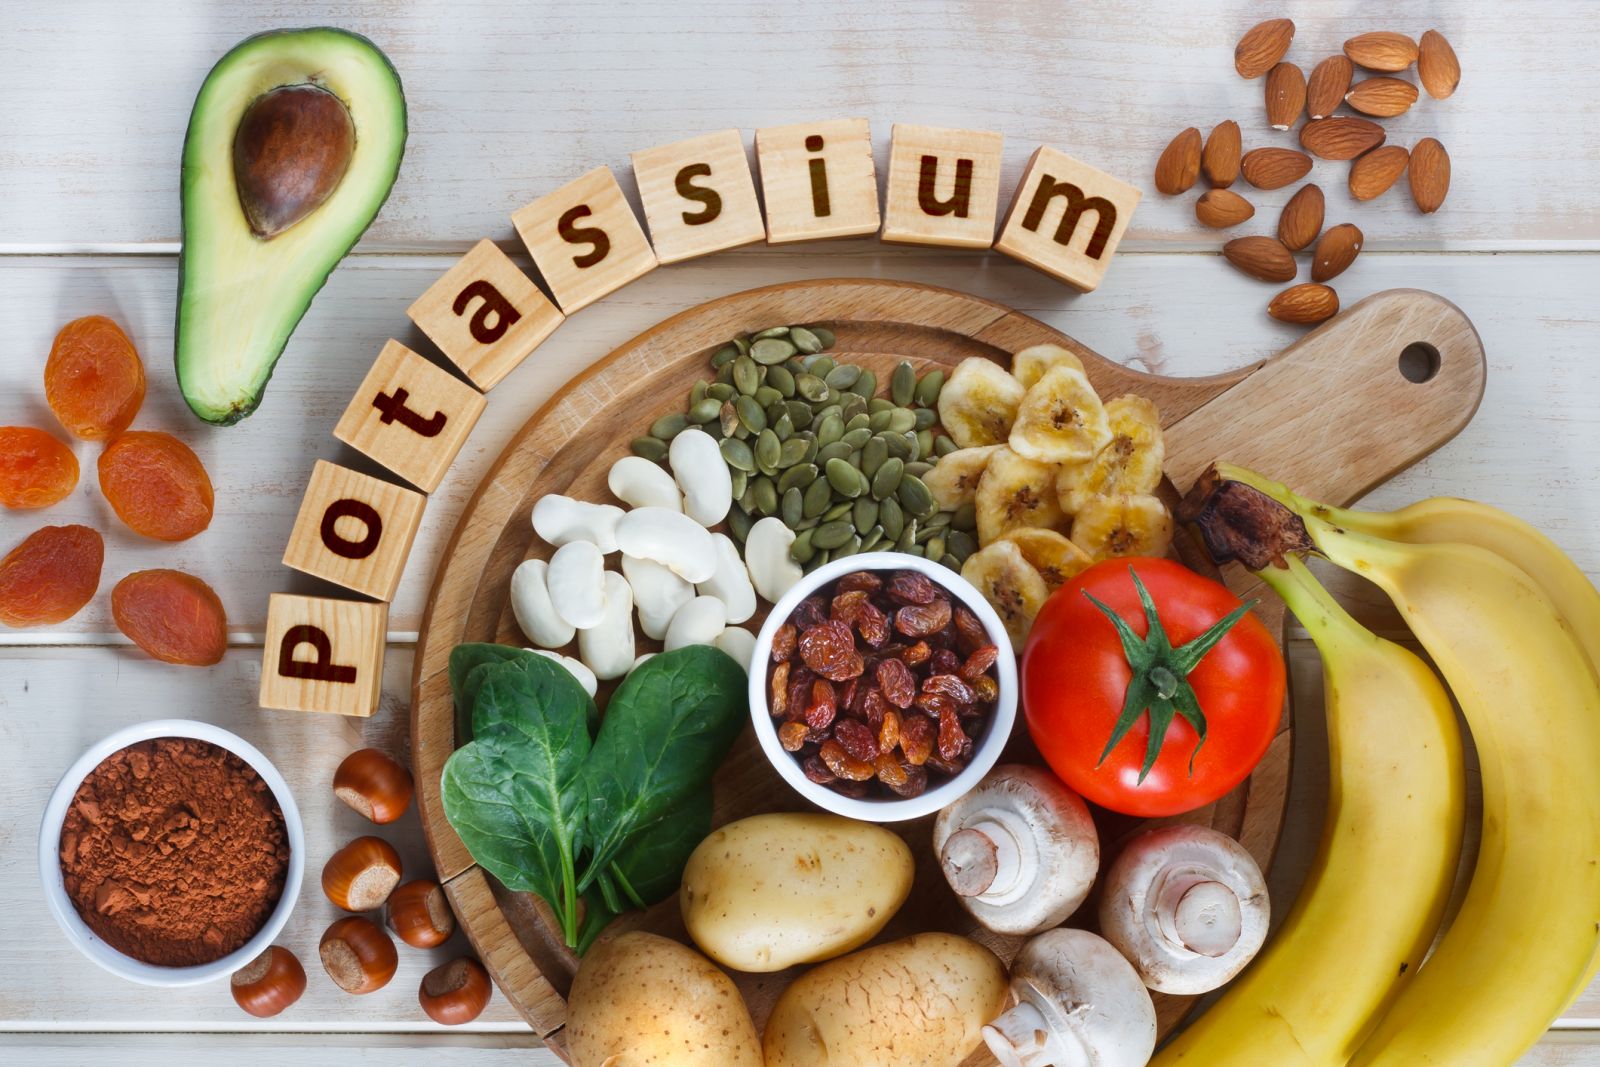 High potassium diets